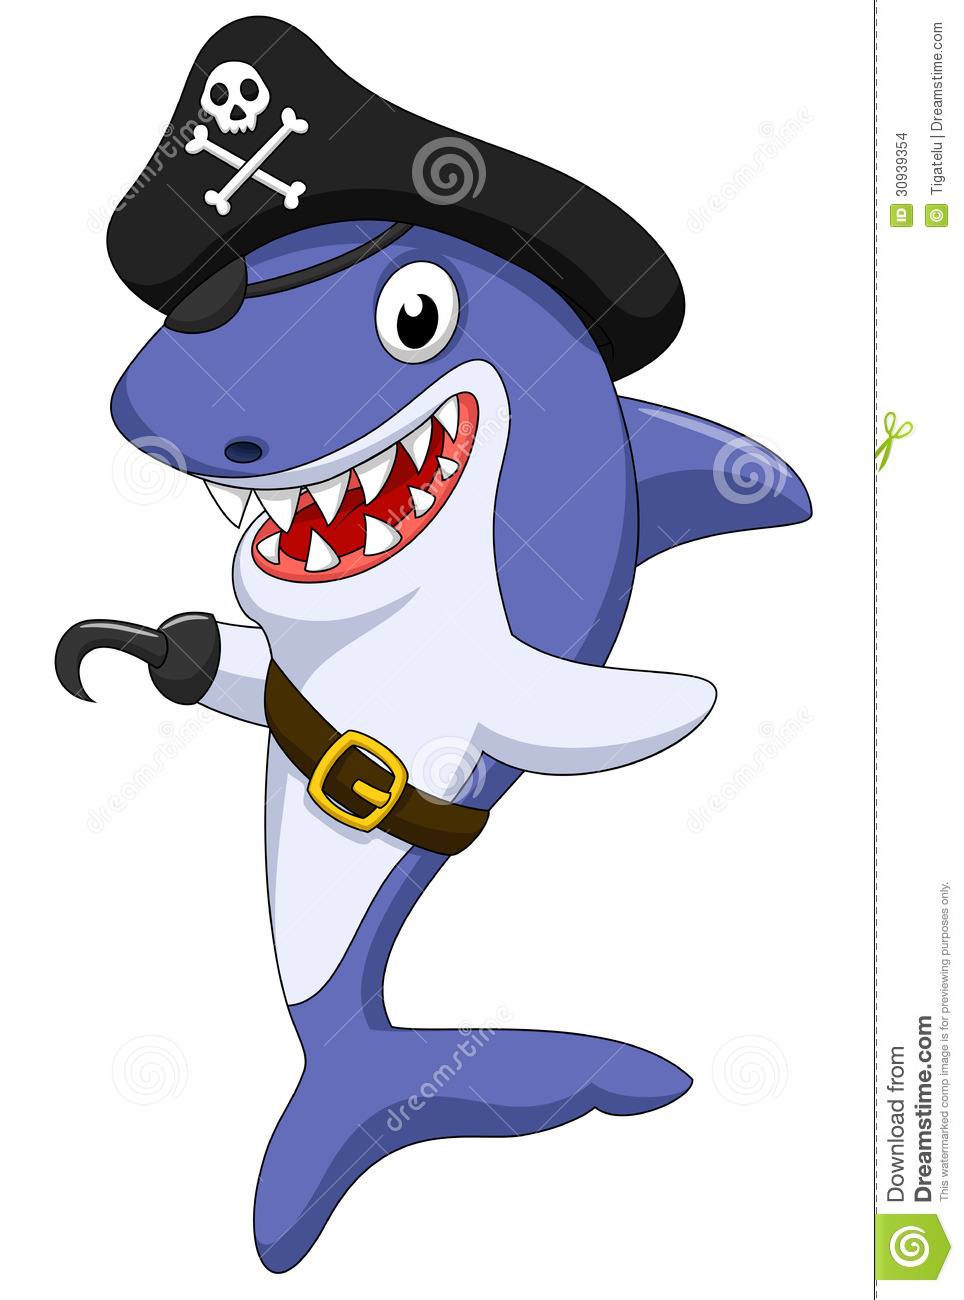 Cute Pirate Shark Cartoon Stock Images   Image  30939354